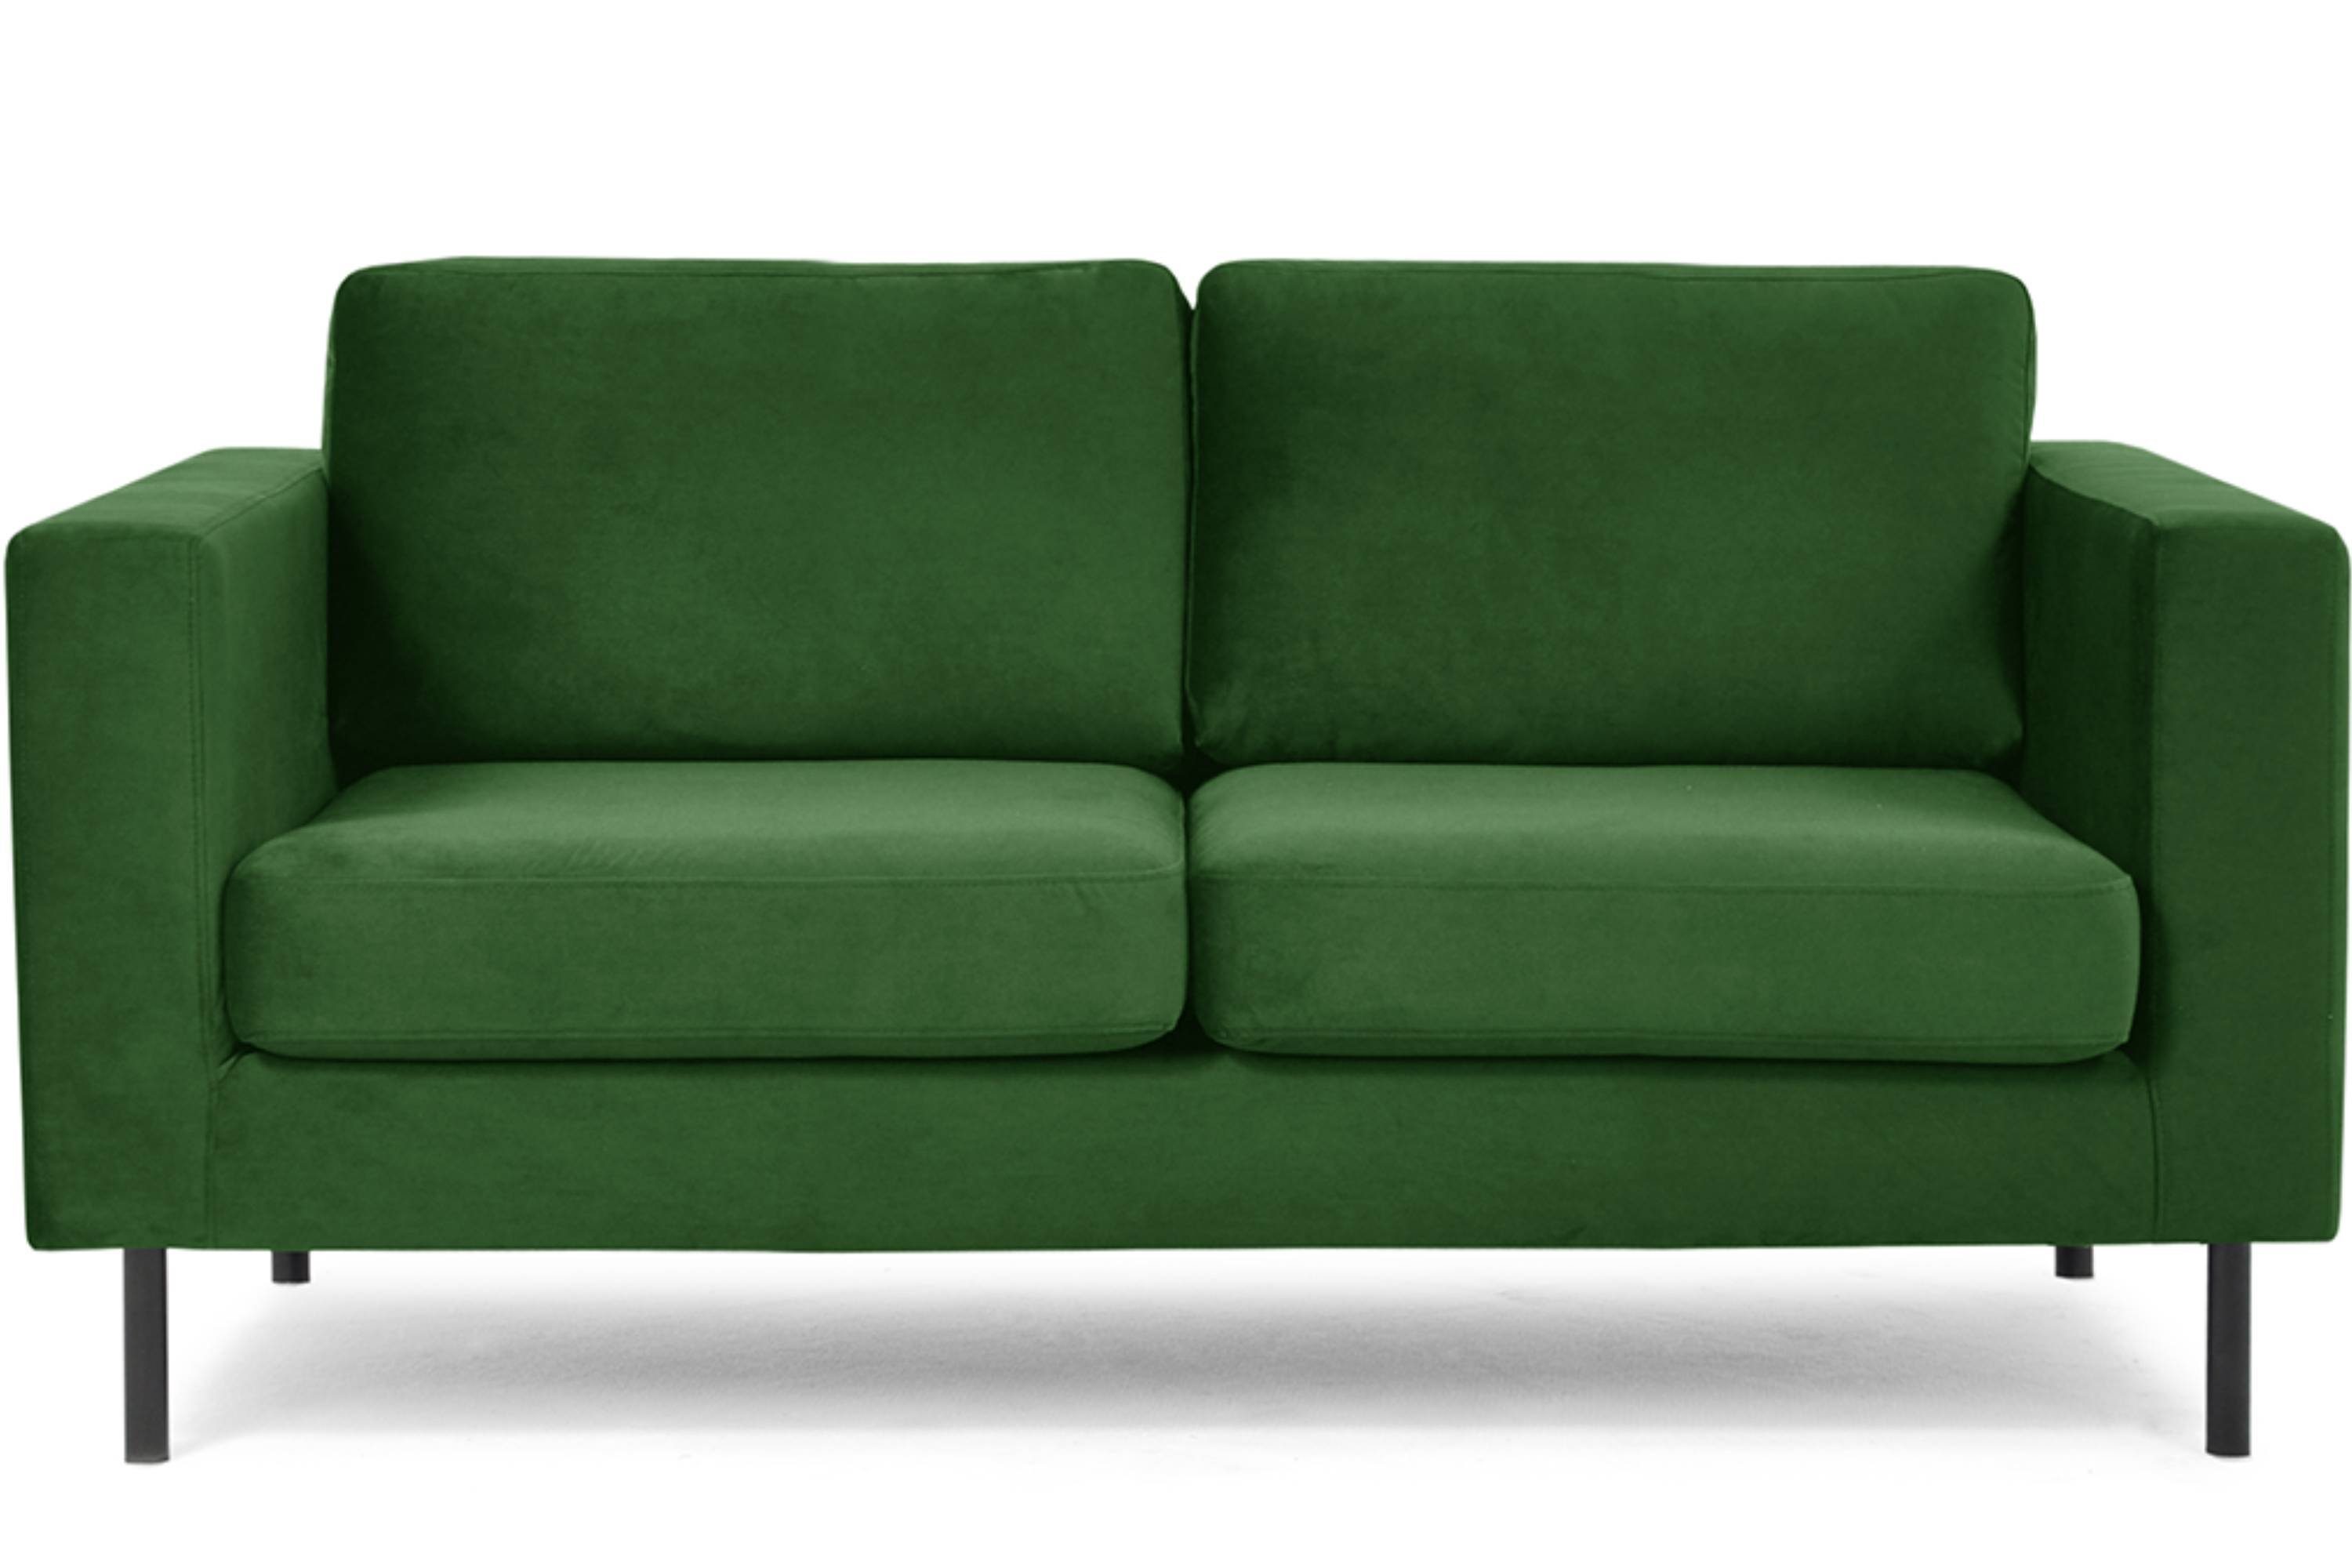 Konsimo 2-Sitzer TOZZI grün Personen, universelles grün grün | Sofa 2 | Design hohe Beine